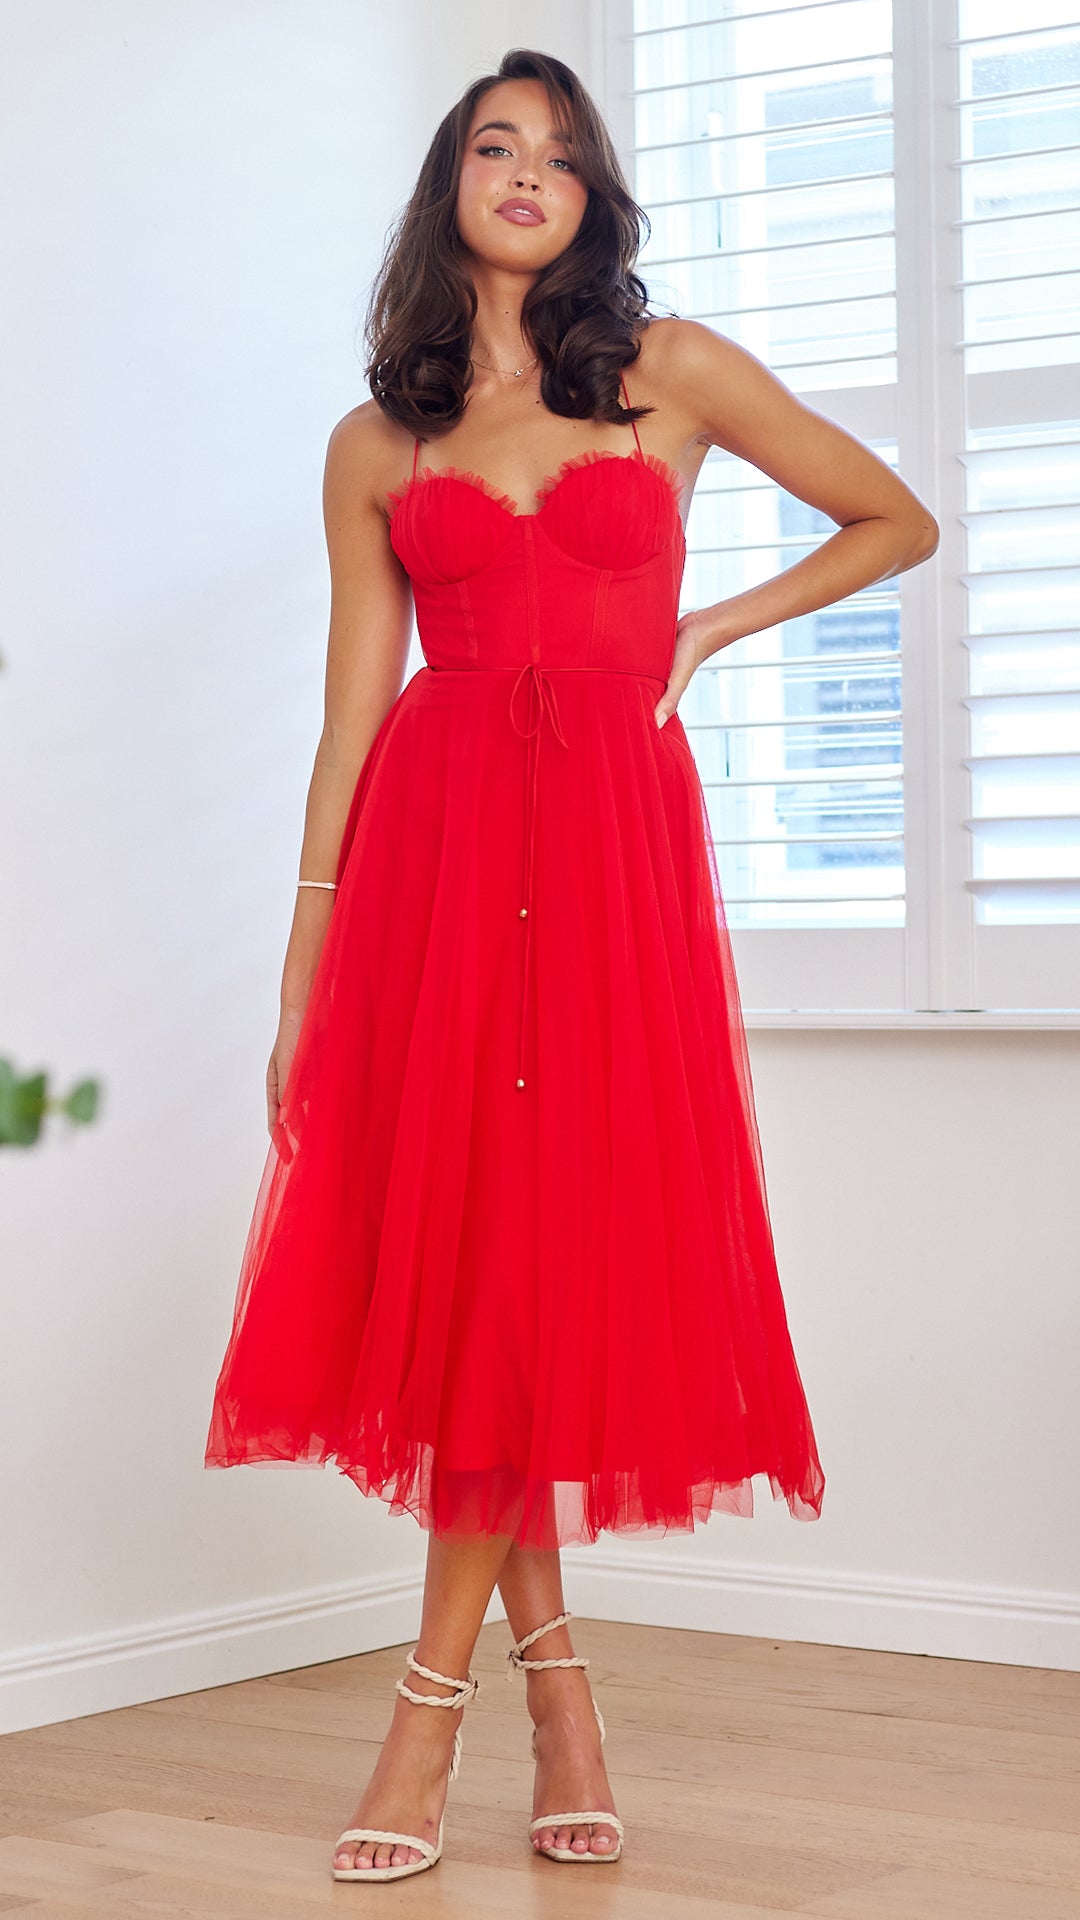 Serenity Corset Dress - Red